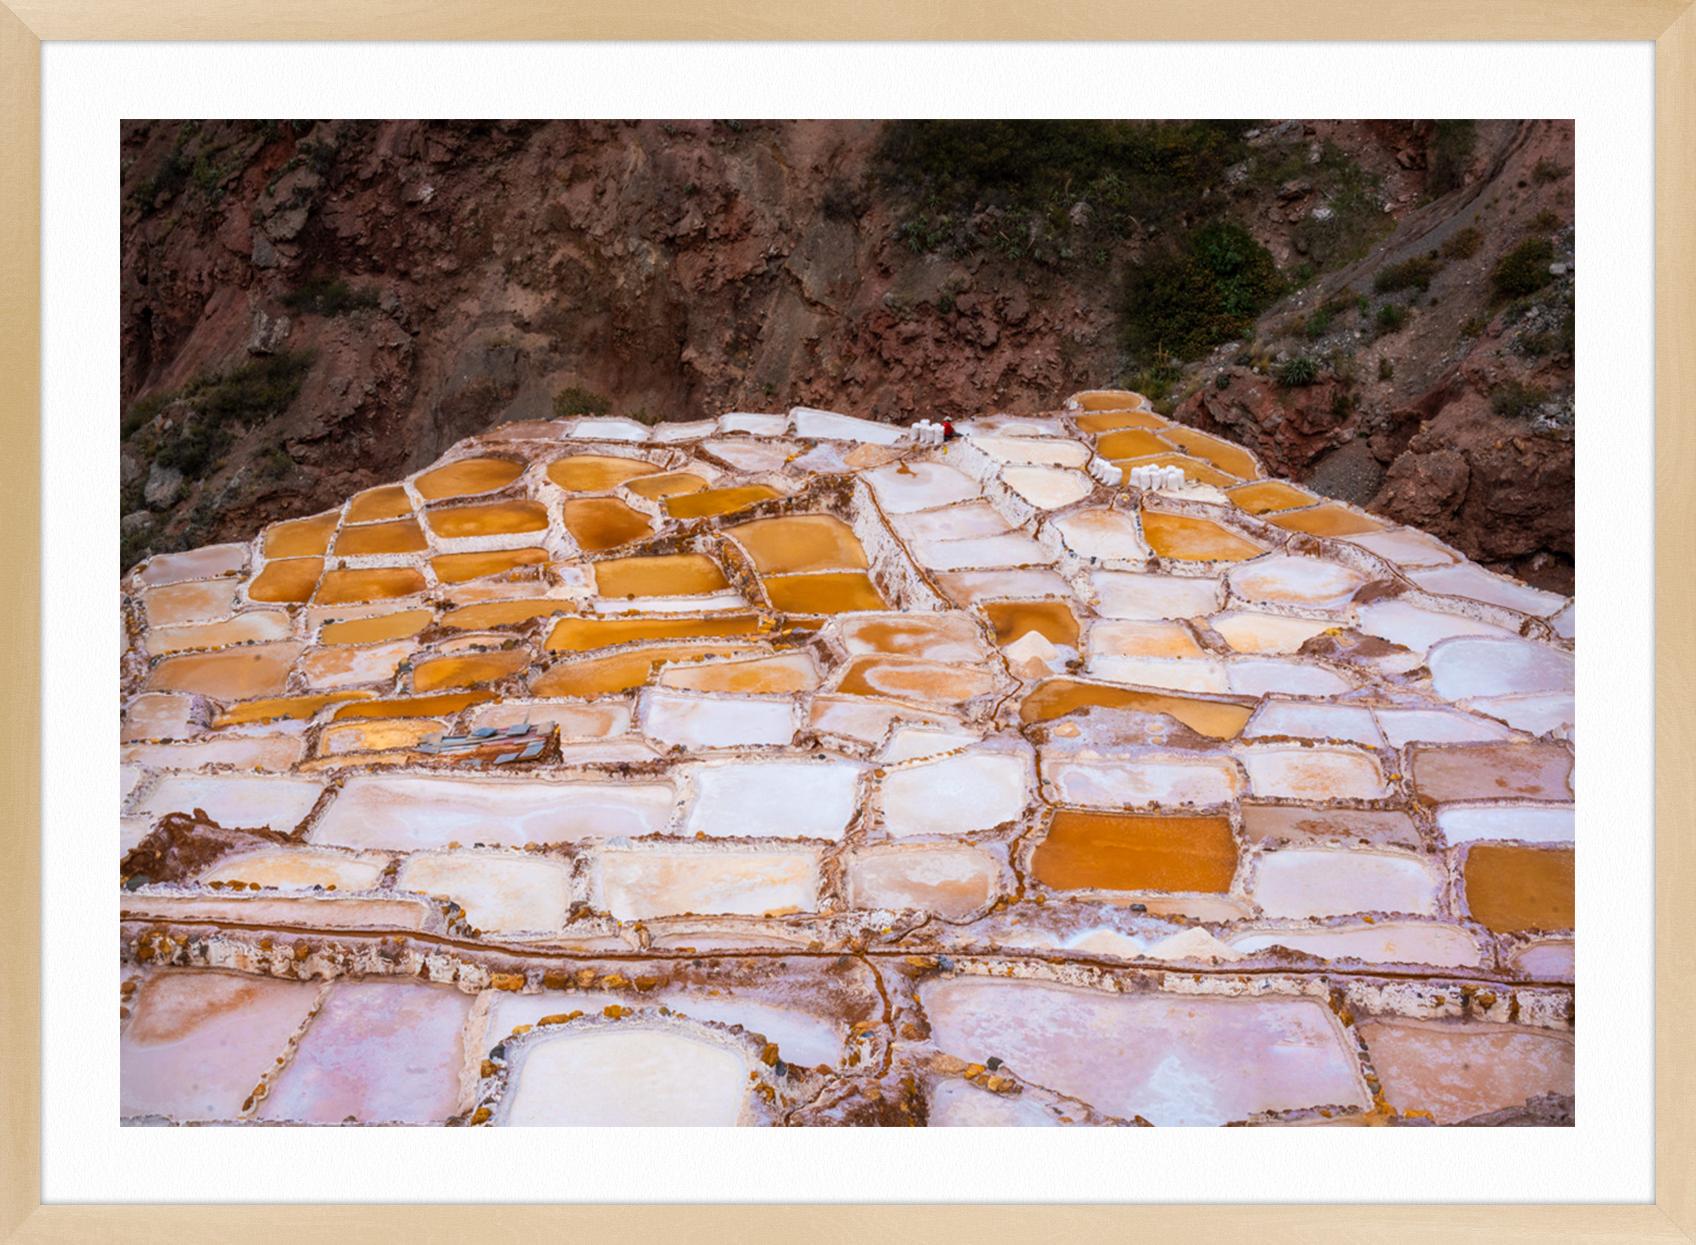 Maras Salt Mine - Beige Landscape Photograph by Luca Marziale